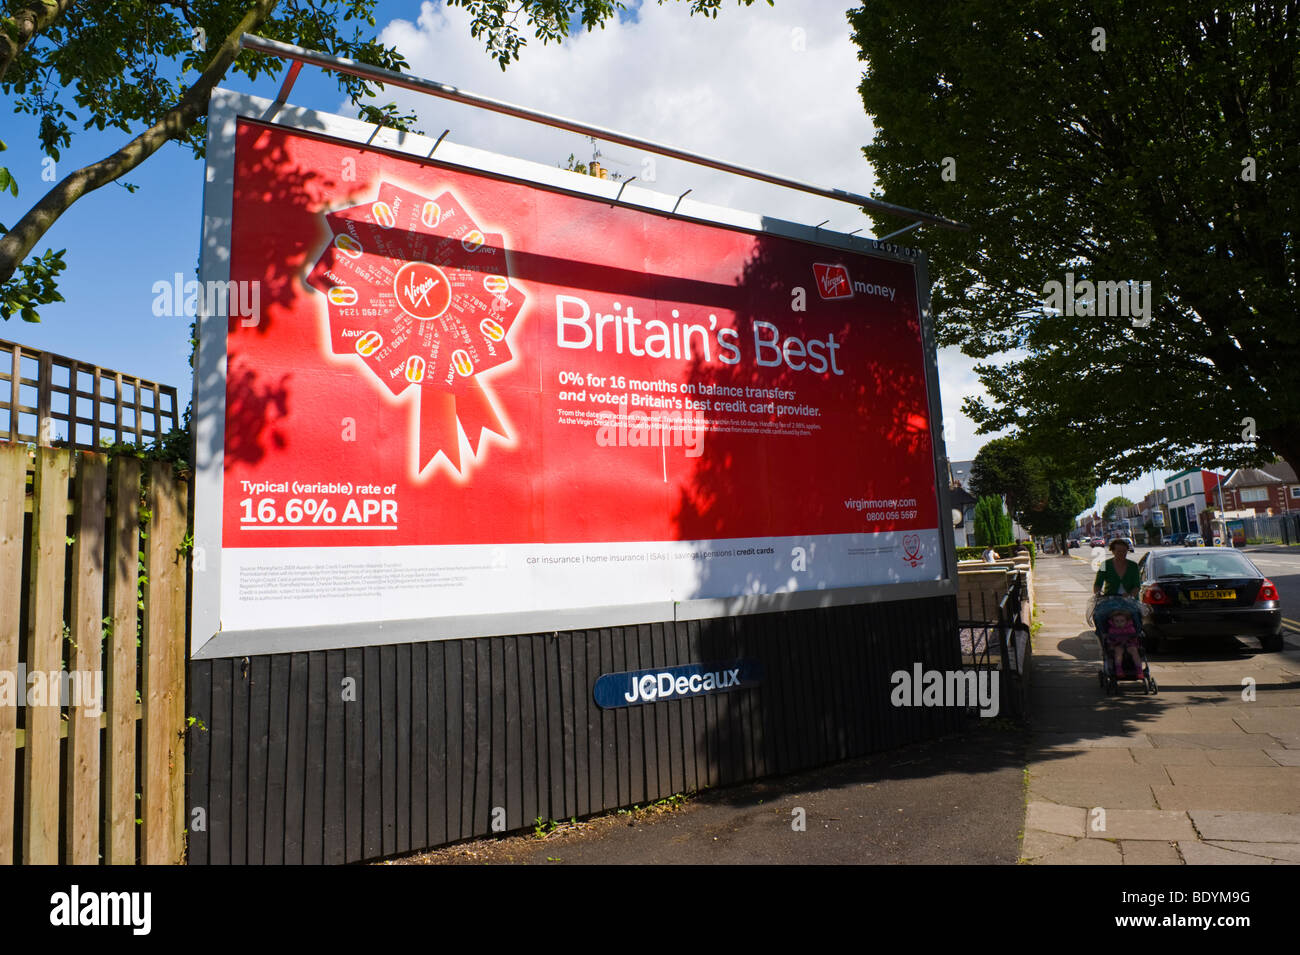 JCDecaux billboard for Virgin Money in UK Stock Photo